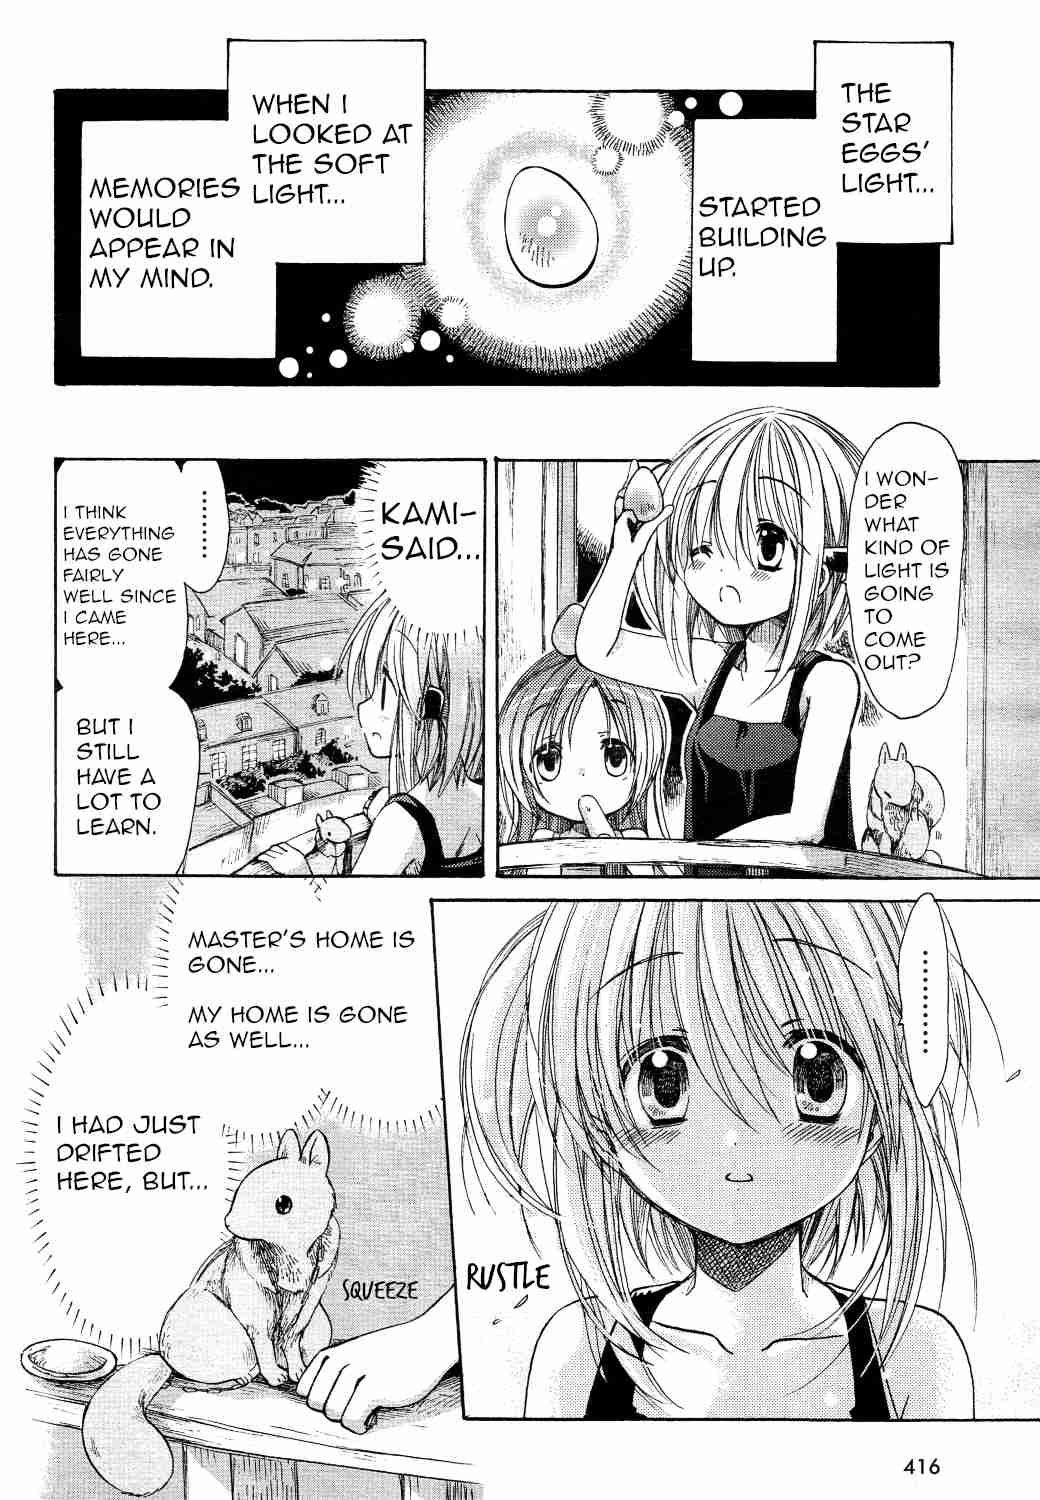 Hibiki no Mahou Vol. 5 Ch. 27 The Magic of the Egg